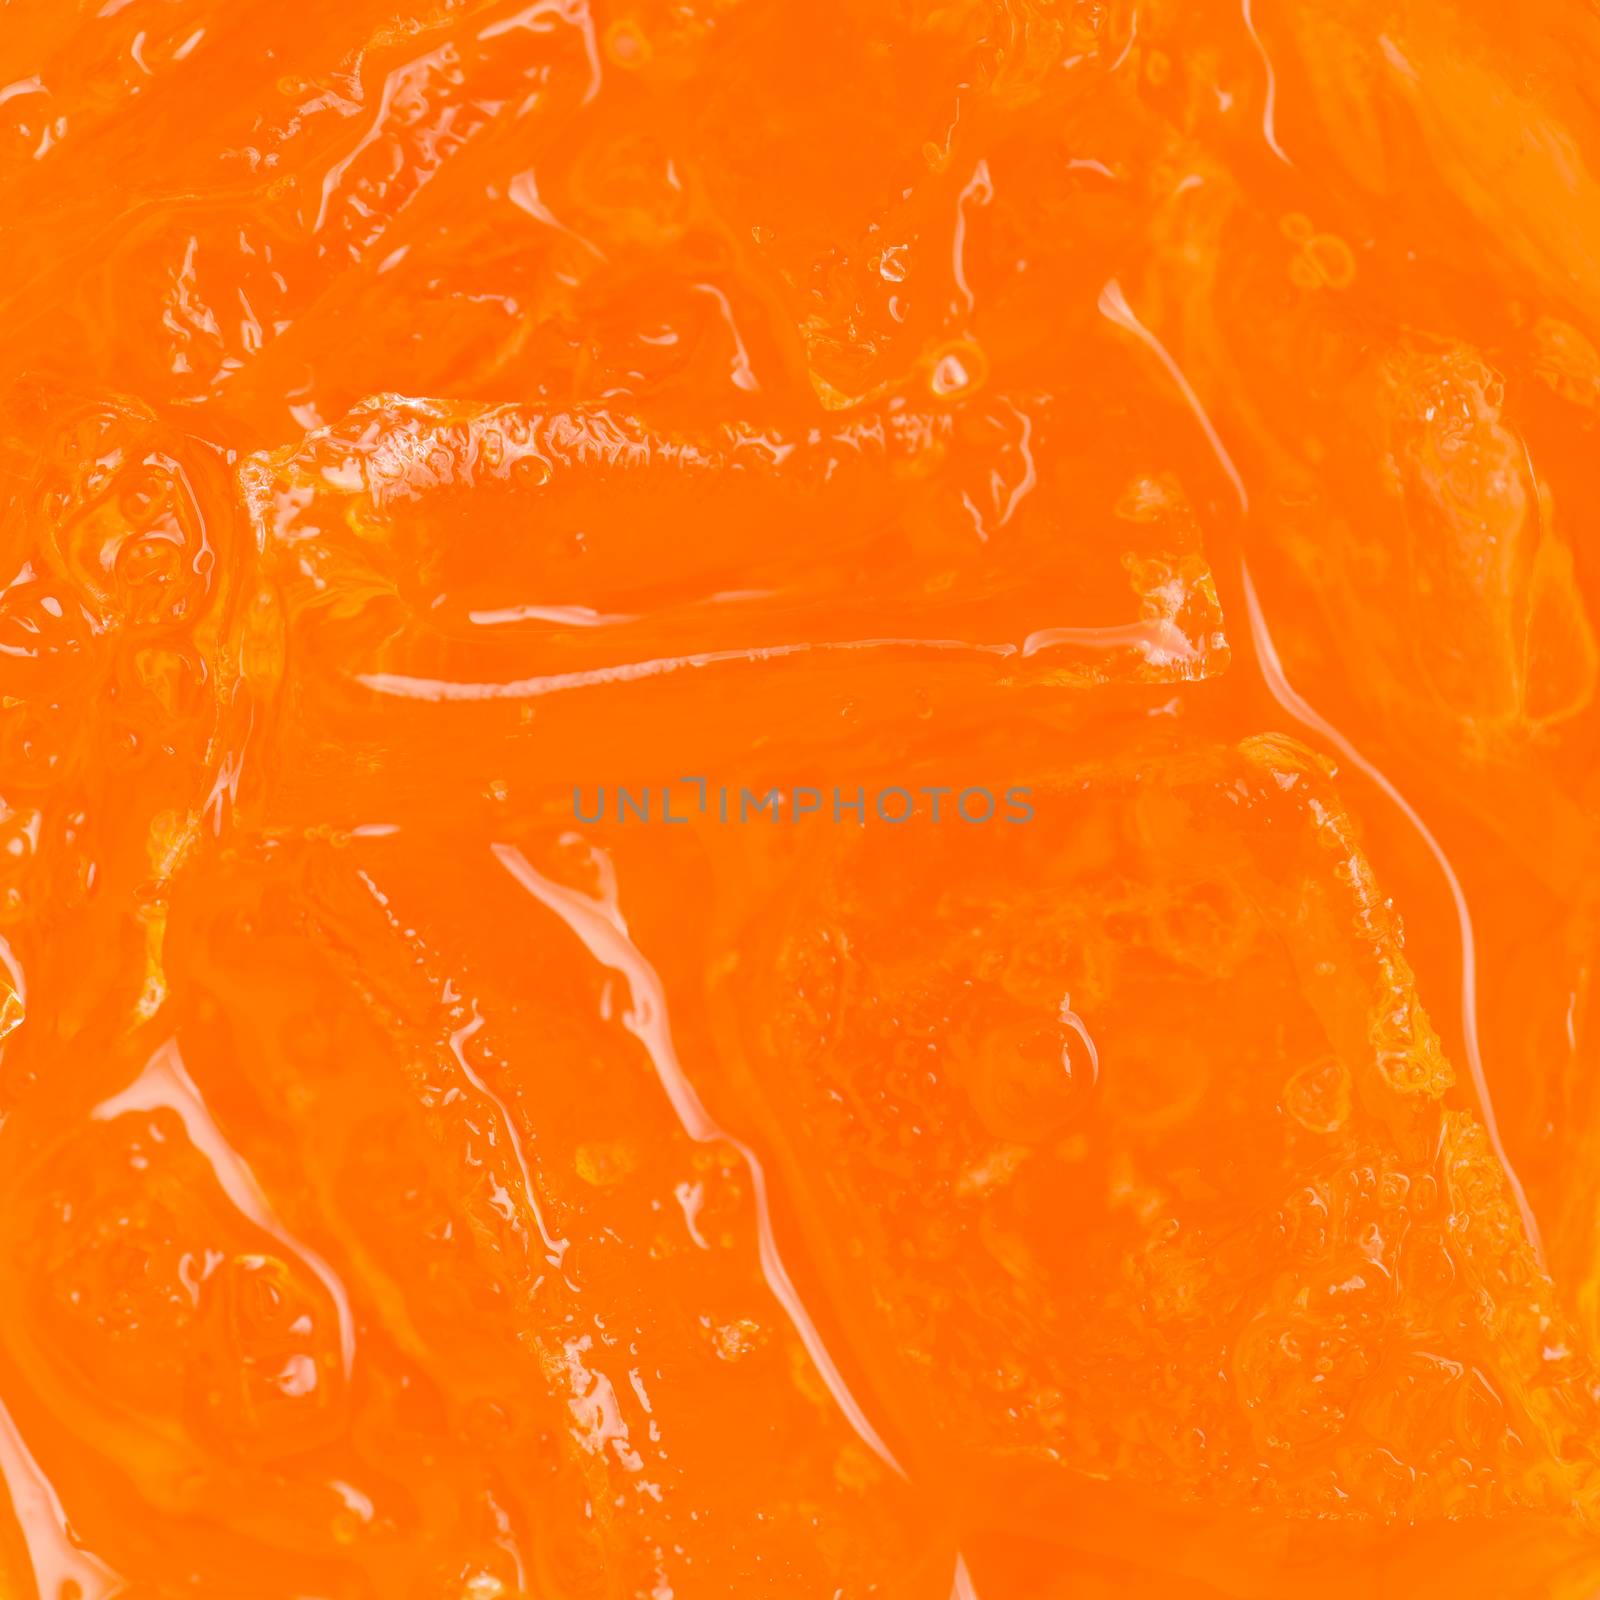 orange soda with ice by antpkr